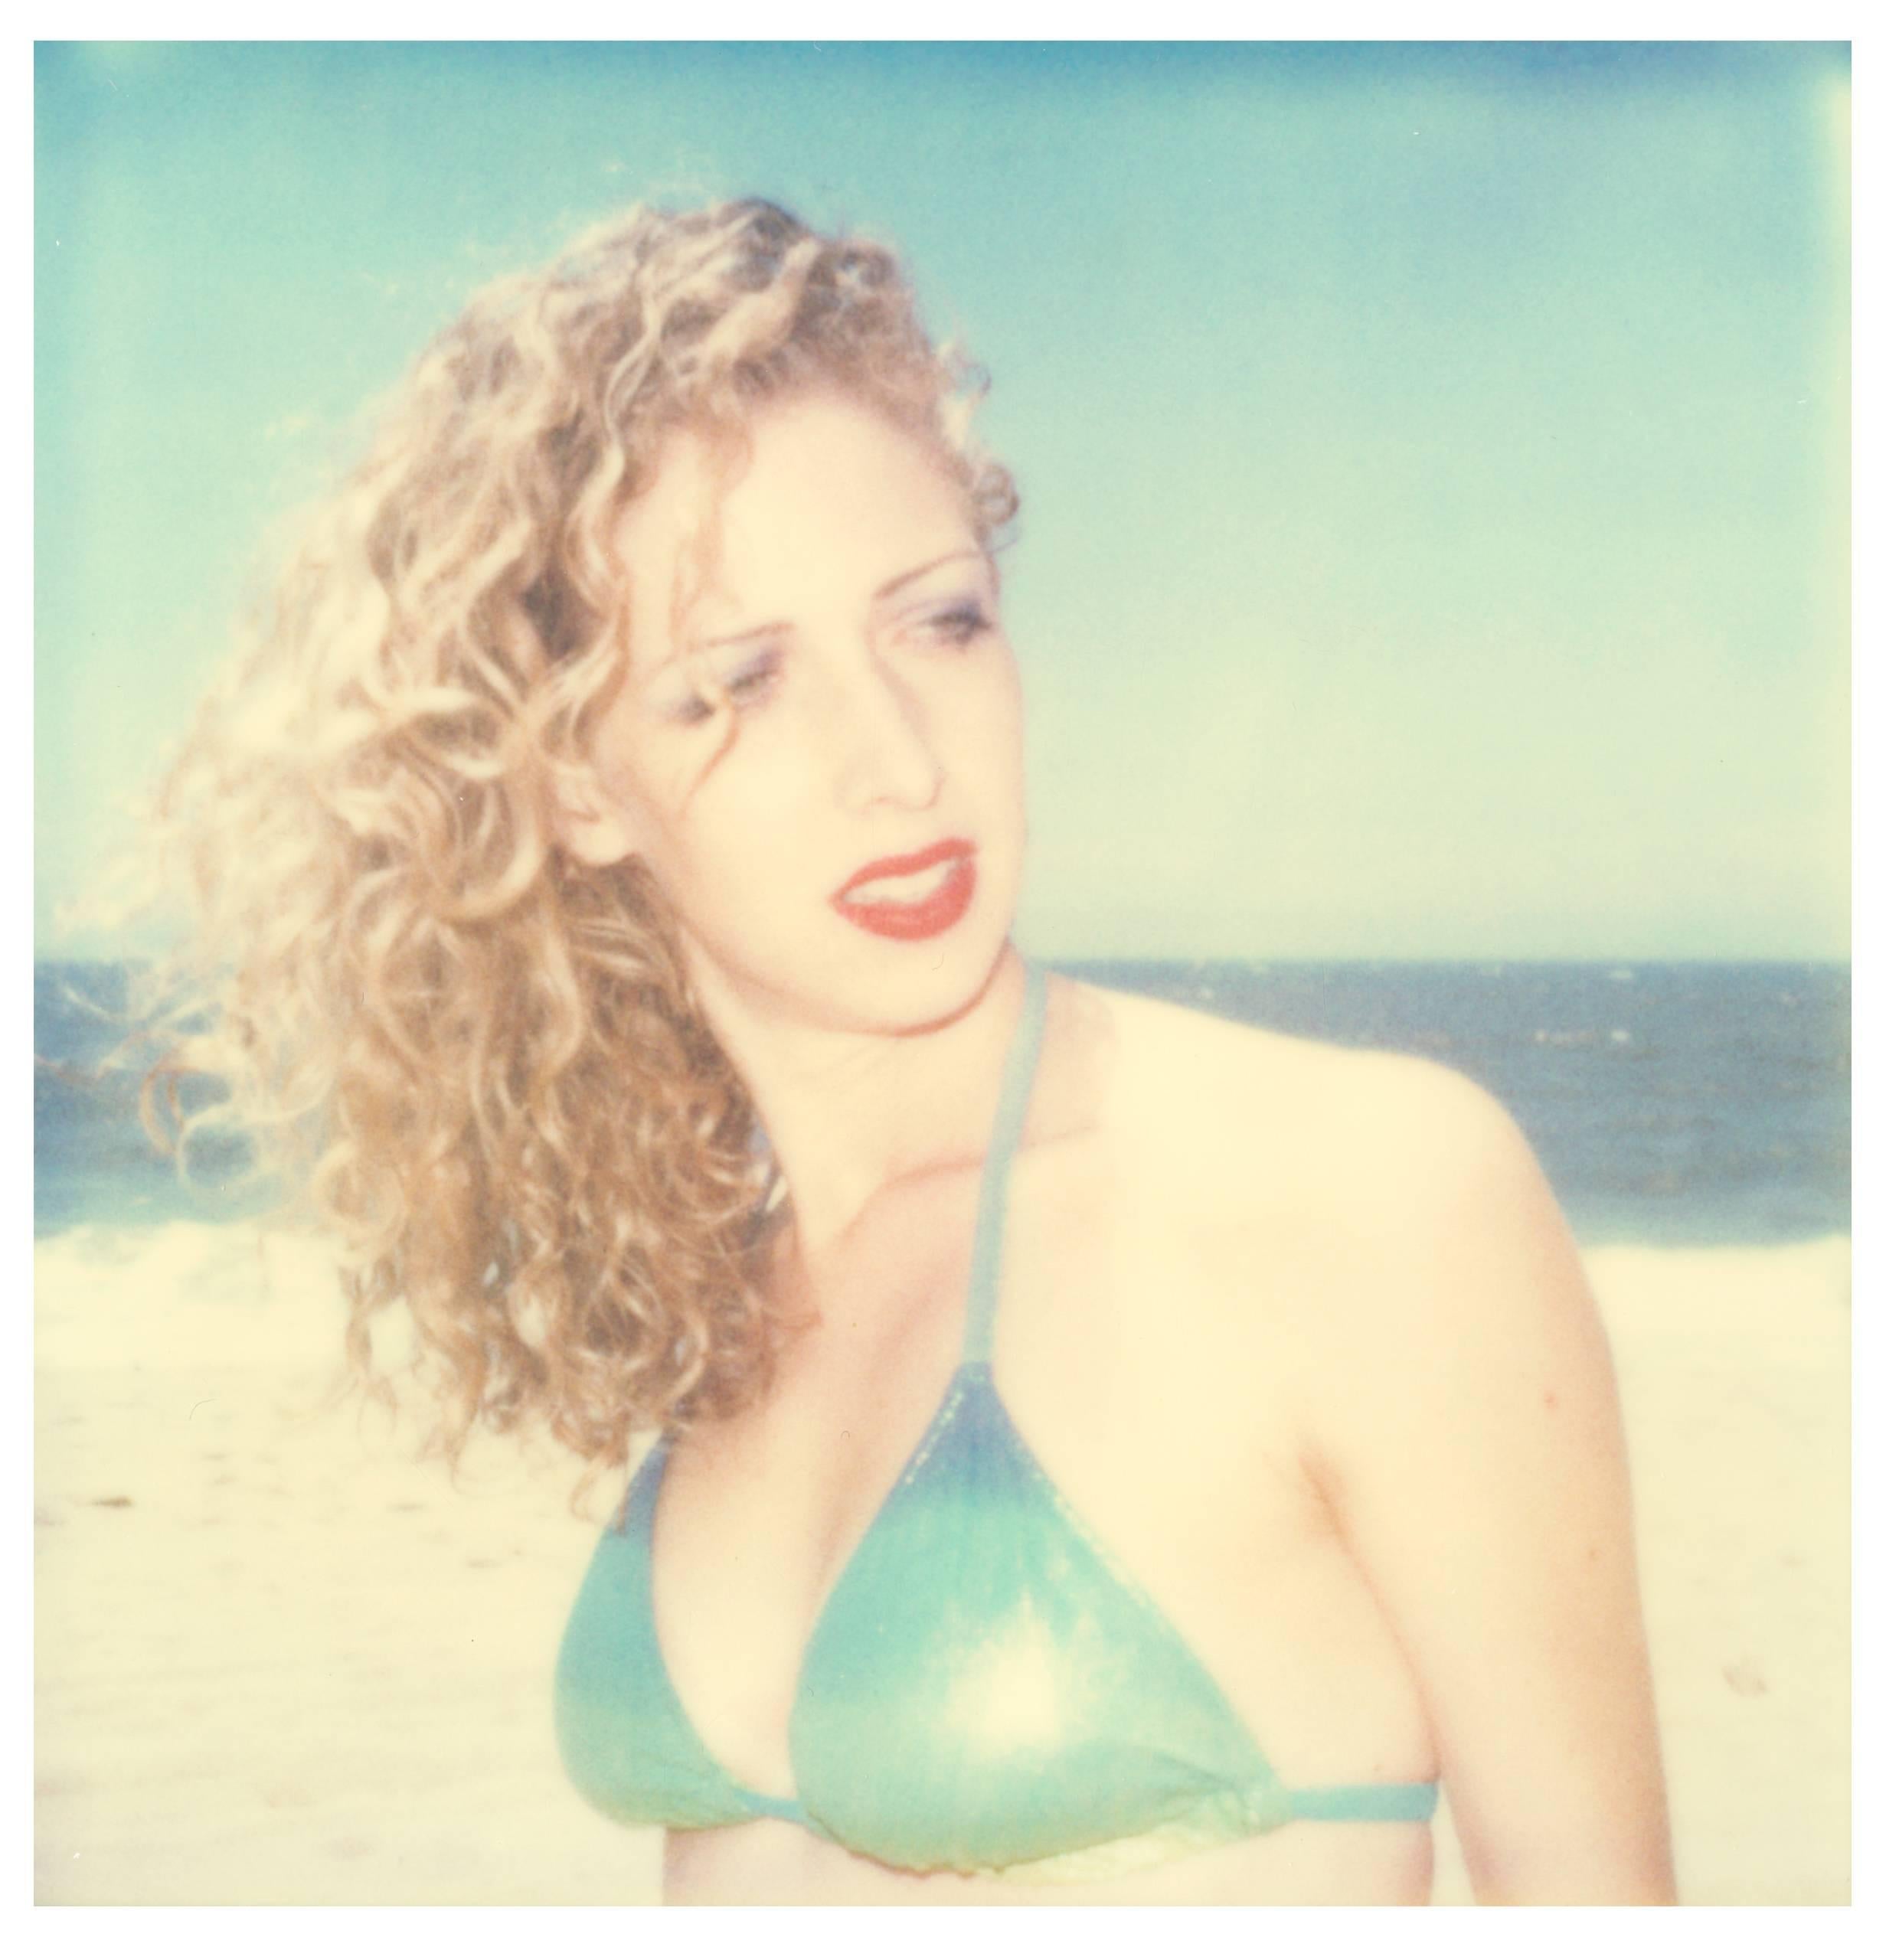 Portrait Photograph Stefanie Schneider - Kelly II (Beachshoot) - Contemporain, 21e siècle, Polaroïd, Portrait